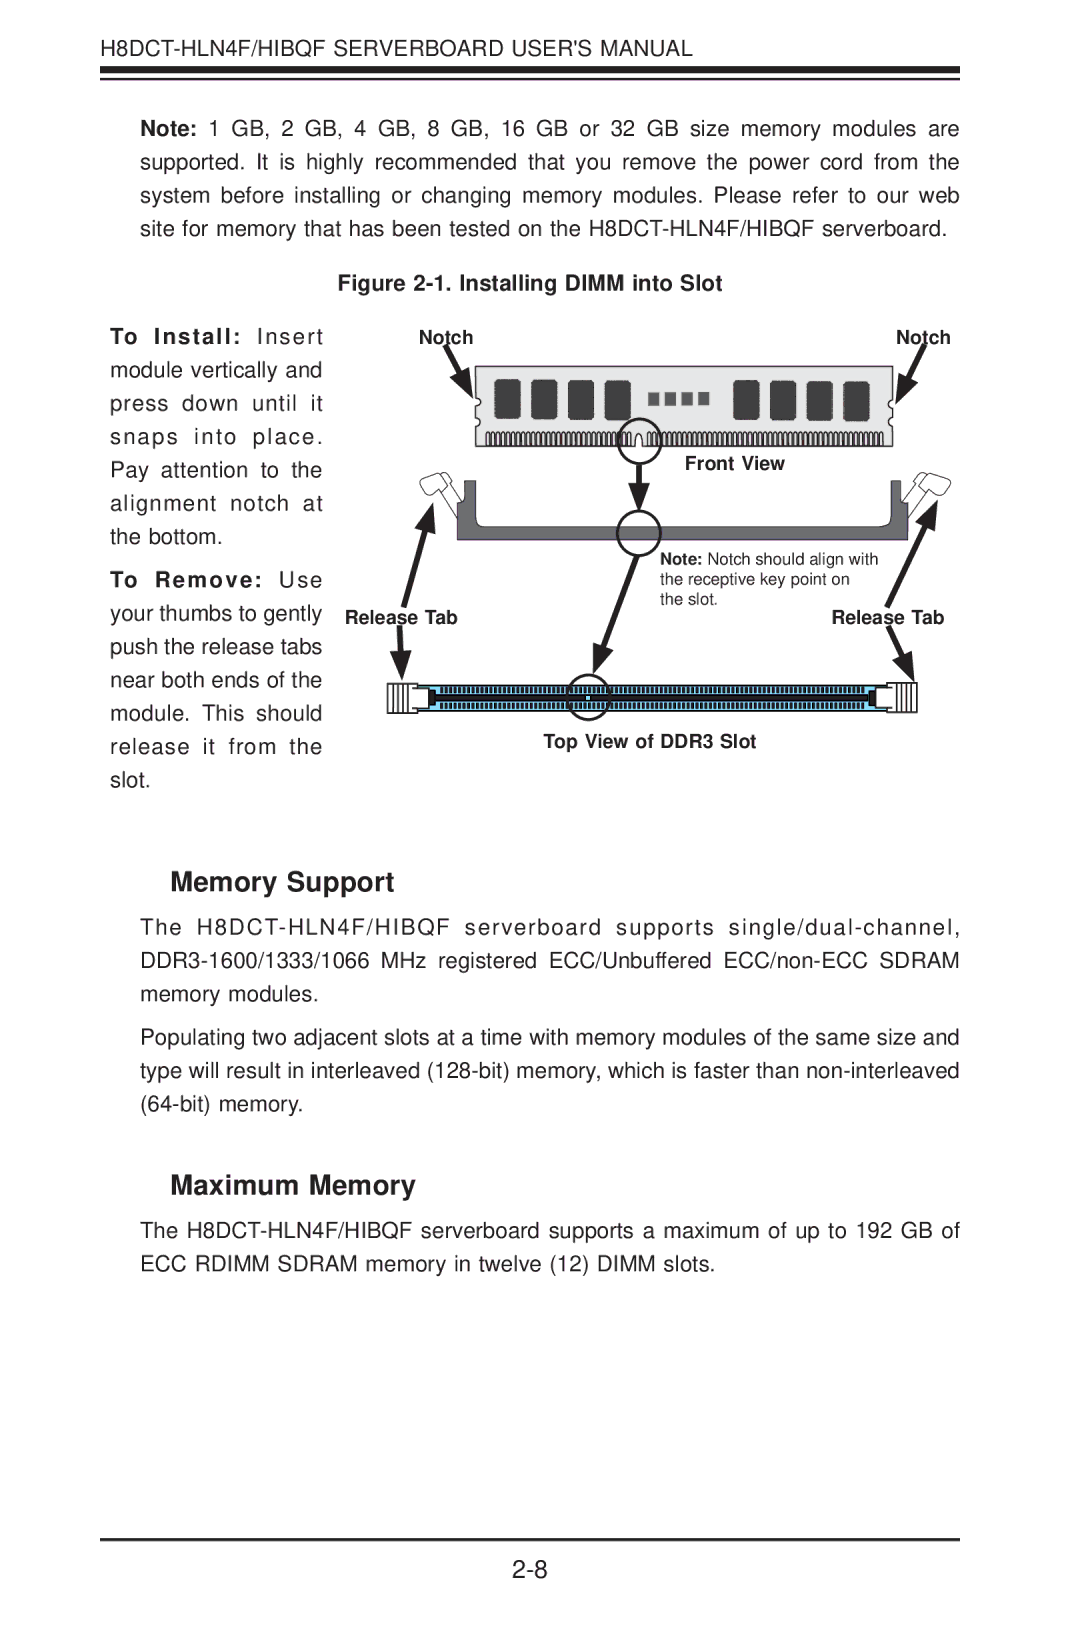 SUPER MICRO Computer H8DCT-HLN4F user manual Memory Support, Maximum Memory 